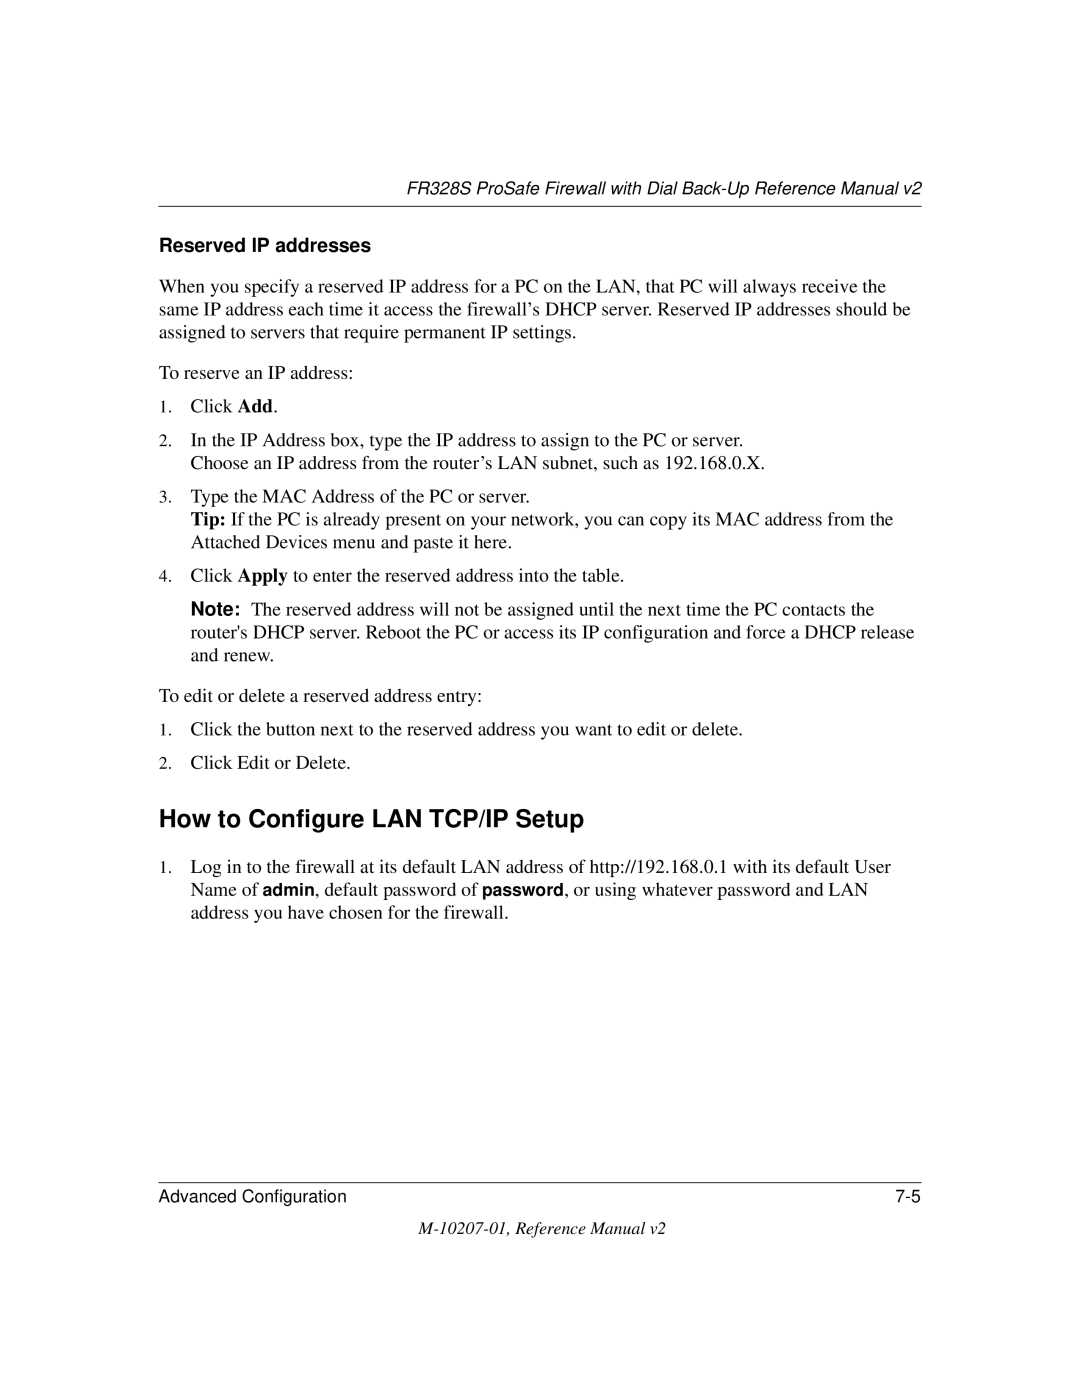 NETGEAR FR328S manual How to Configure LAN TCP/IP Setup, Reserved IP addresses 